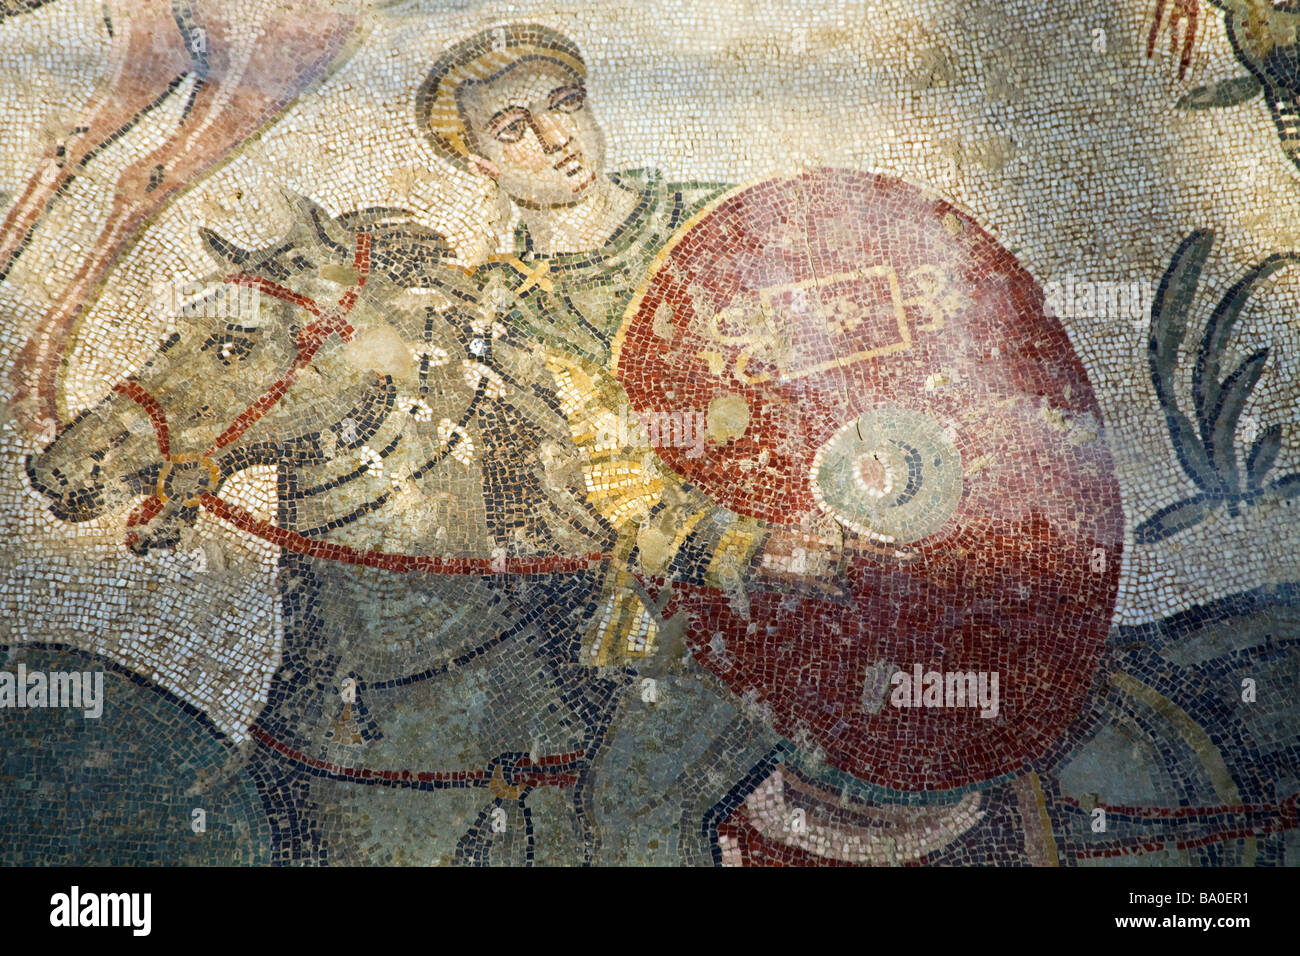 Jäger auf Reiten Mosaik Villa Romana del Casale 4. Jahrhundert in der Nähe von Piazza Armerina Sizilien Italien Europa EU Stockfoto